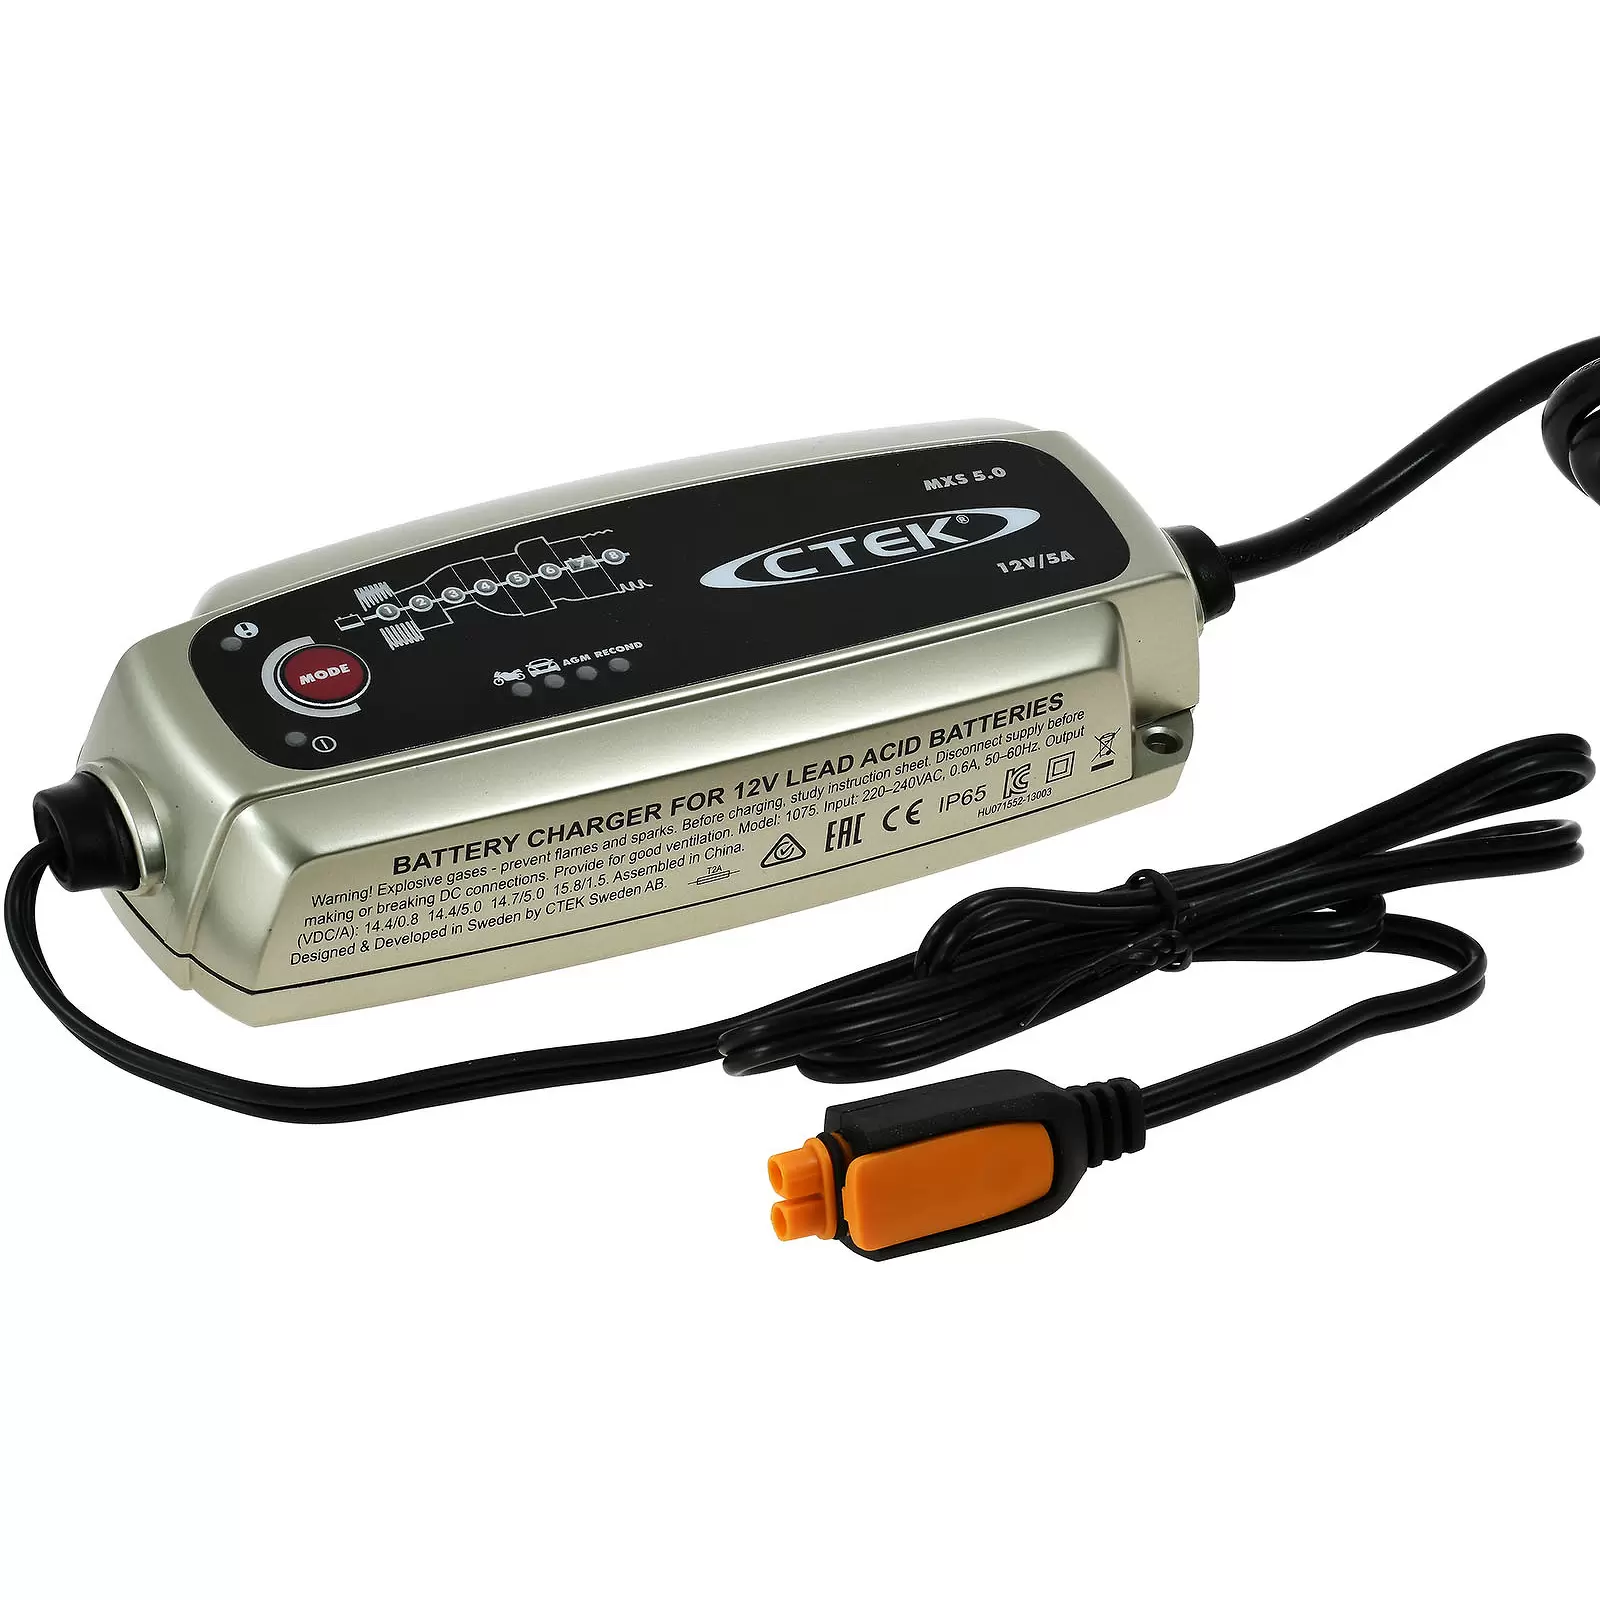 CTEK MXS 5.0 Batterie-Ladegerät mit autom. Temperaturkompensation 12V 5A EU-Stecker